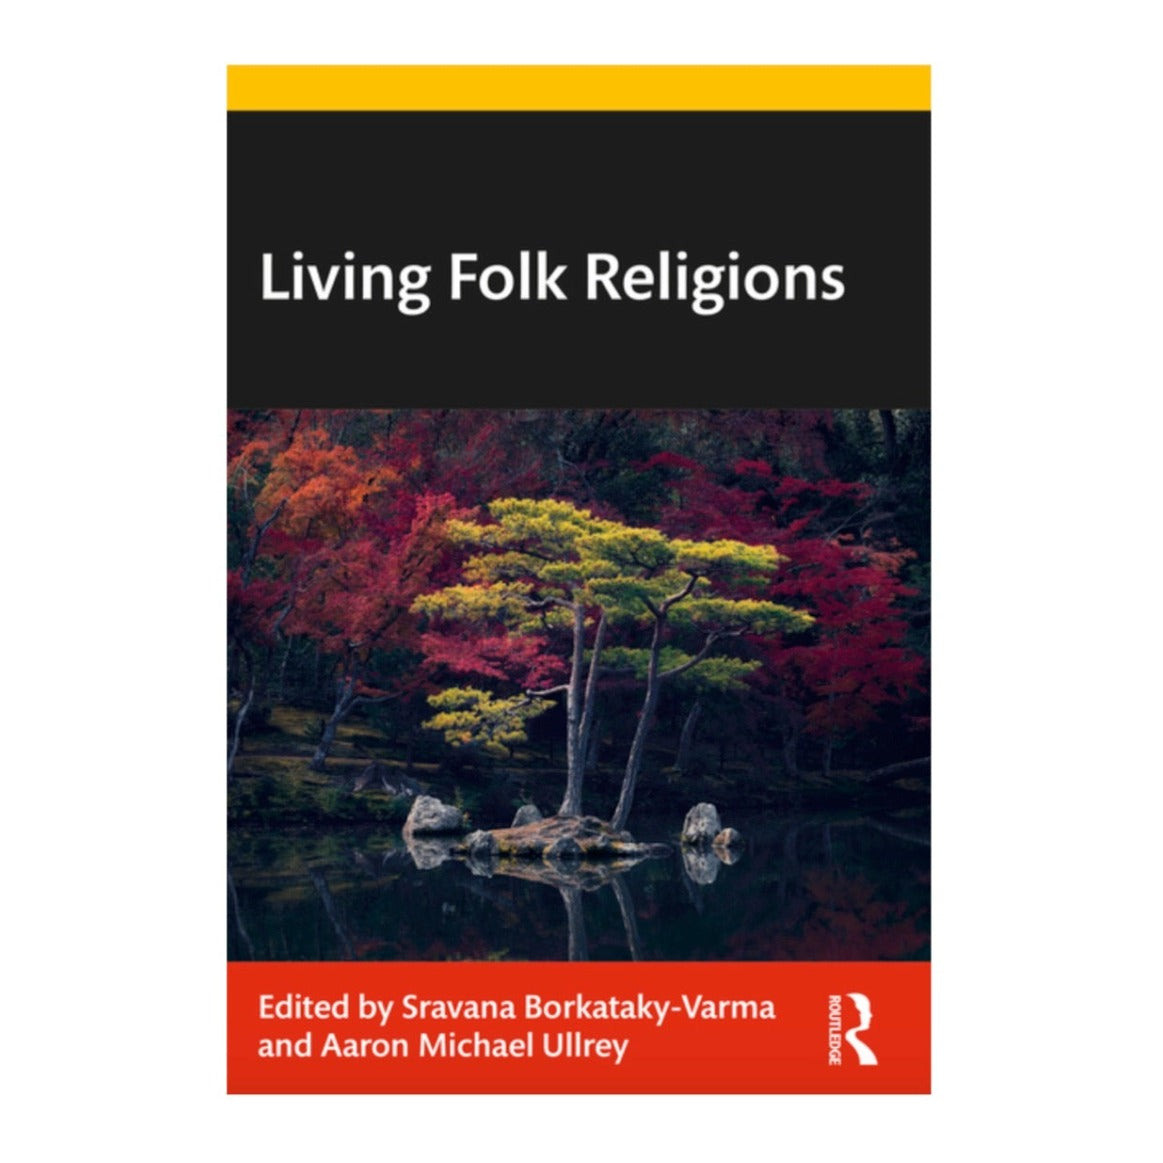 Living Folk Religions by Sravana Borkataky-Varma and Aaron Michael Ullrey